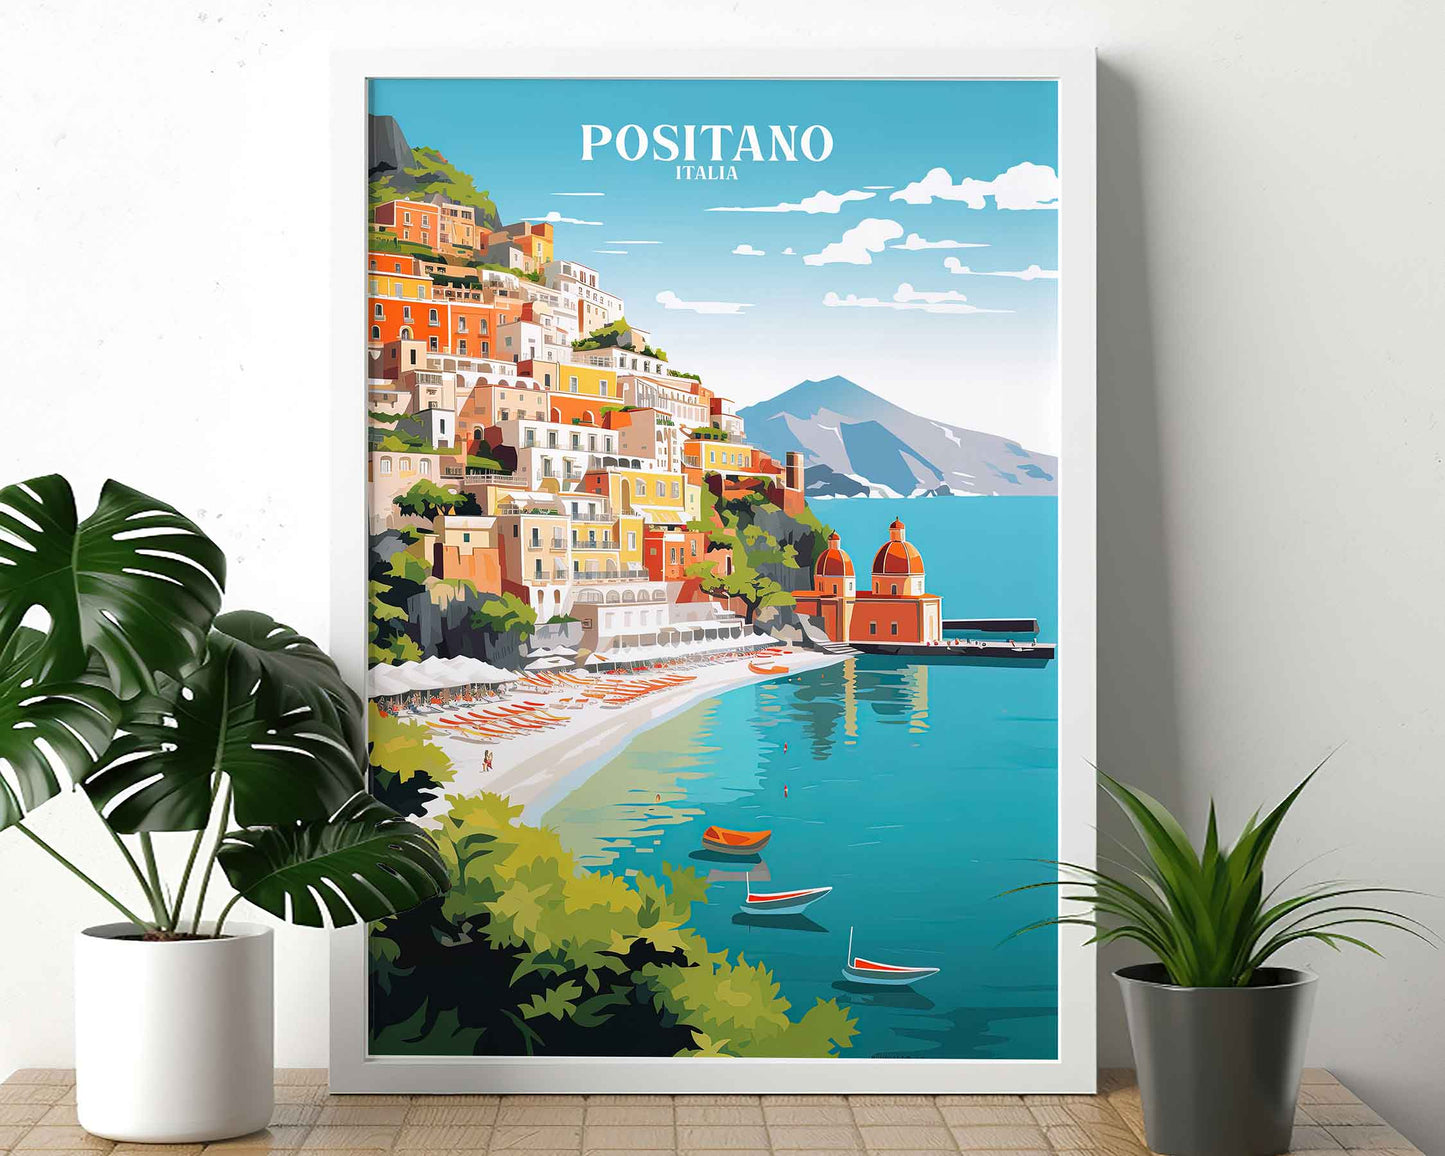 Framed Image of Positano Italy Wall Art Print Travel Posters Illustration